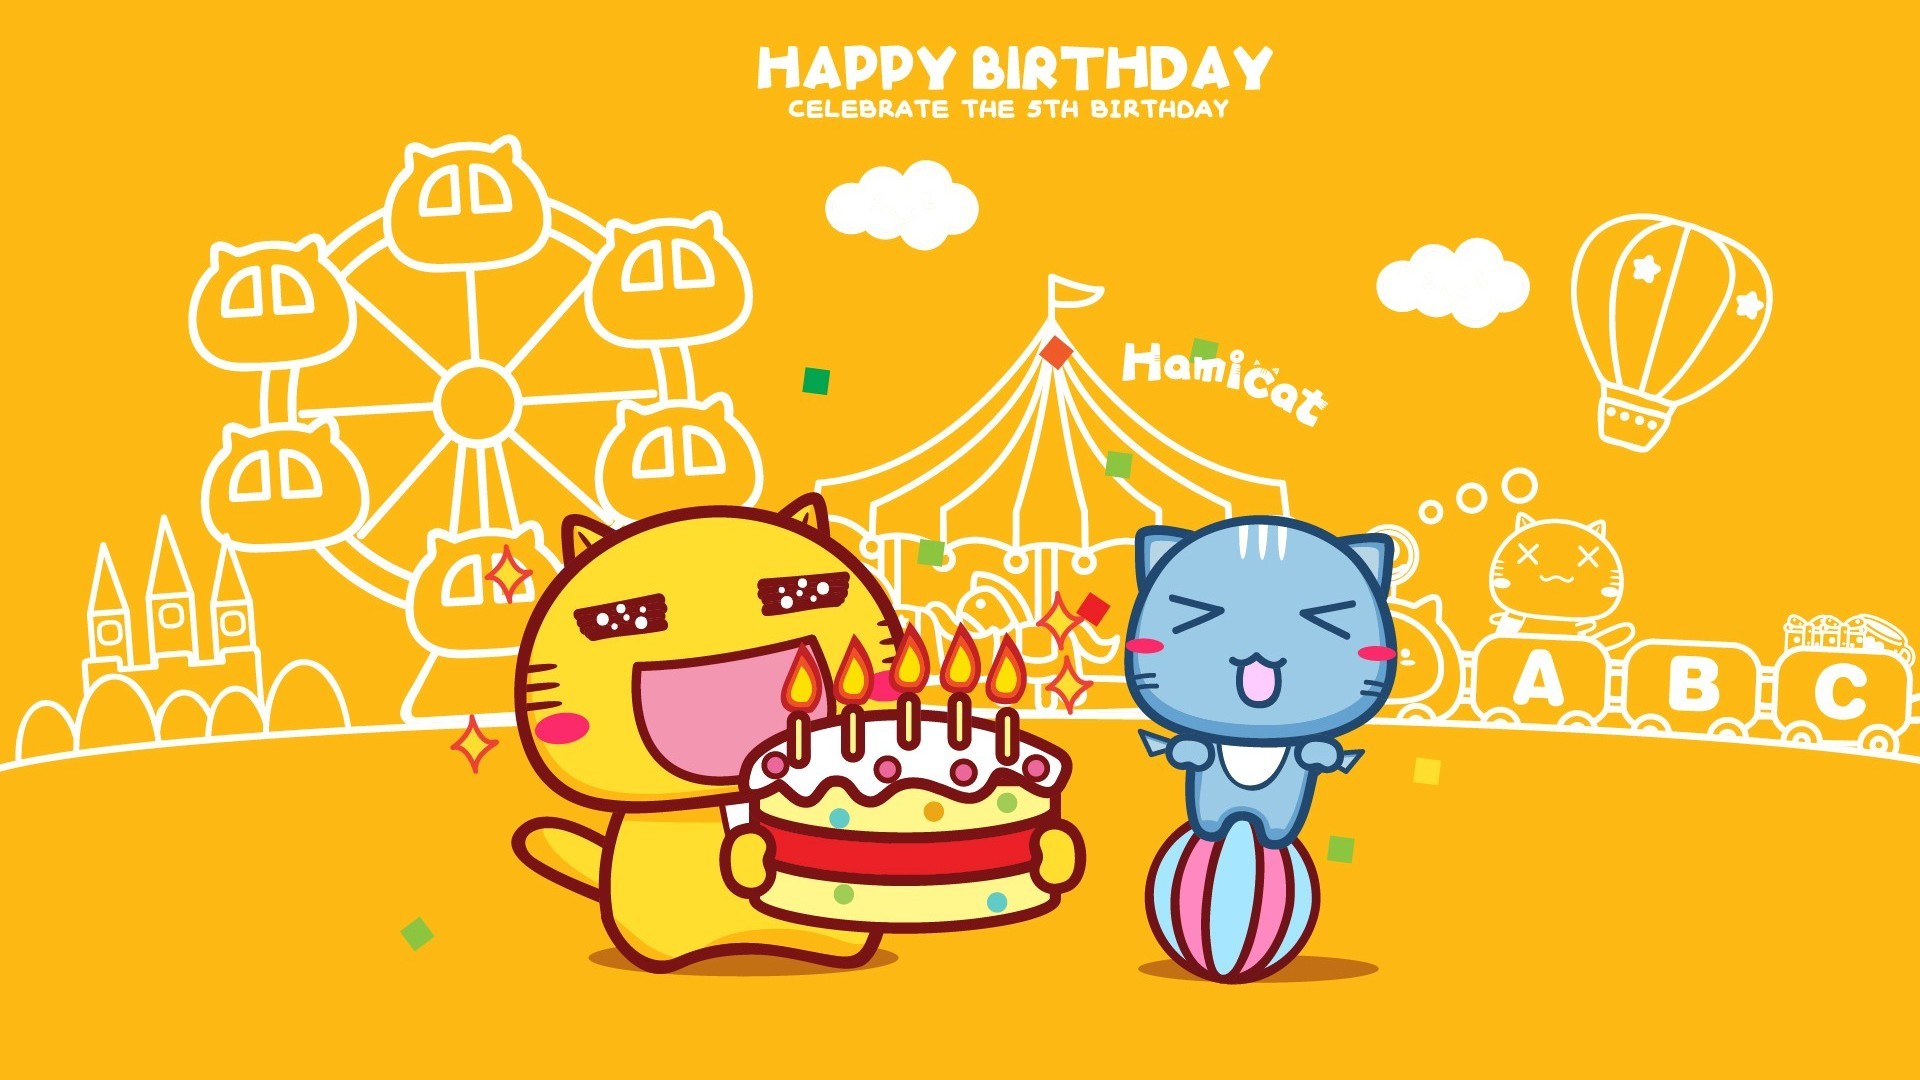 Hamicat哈咪猫Happy birthday生日快乐图片壁纸